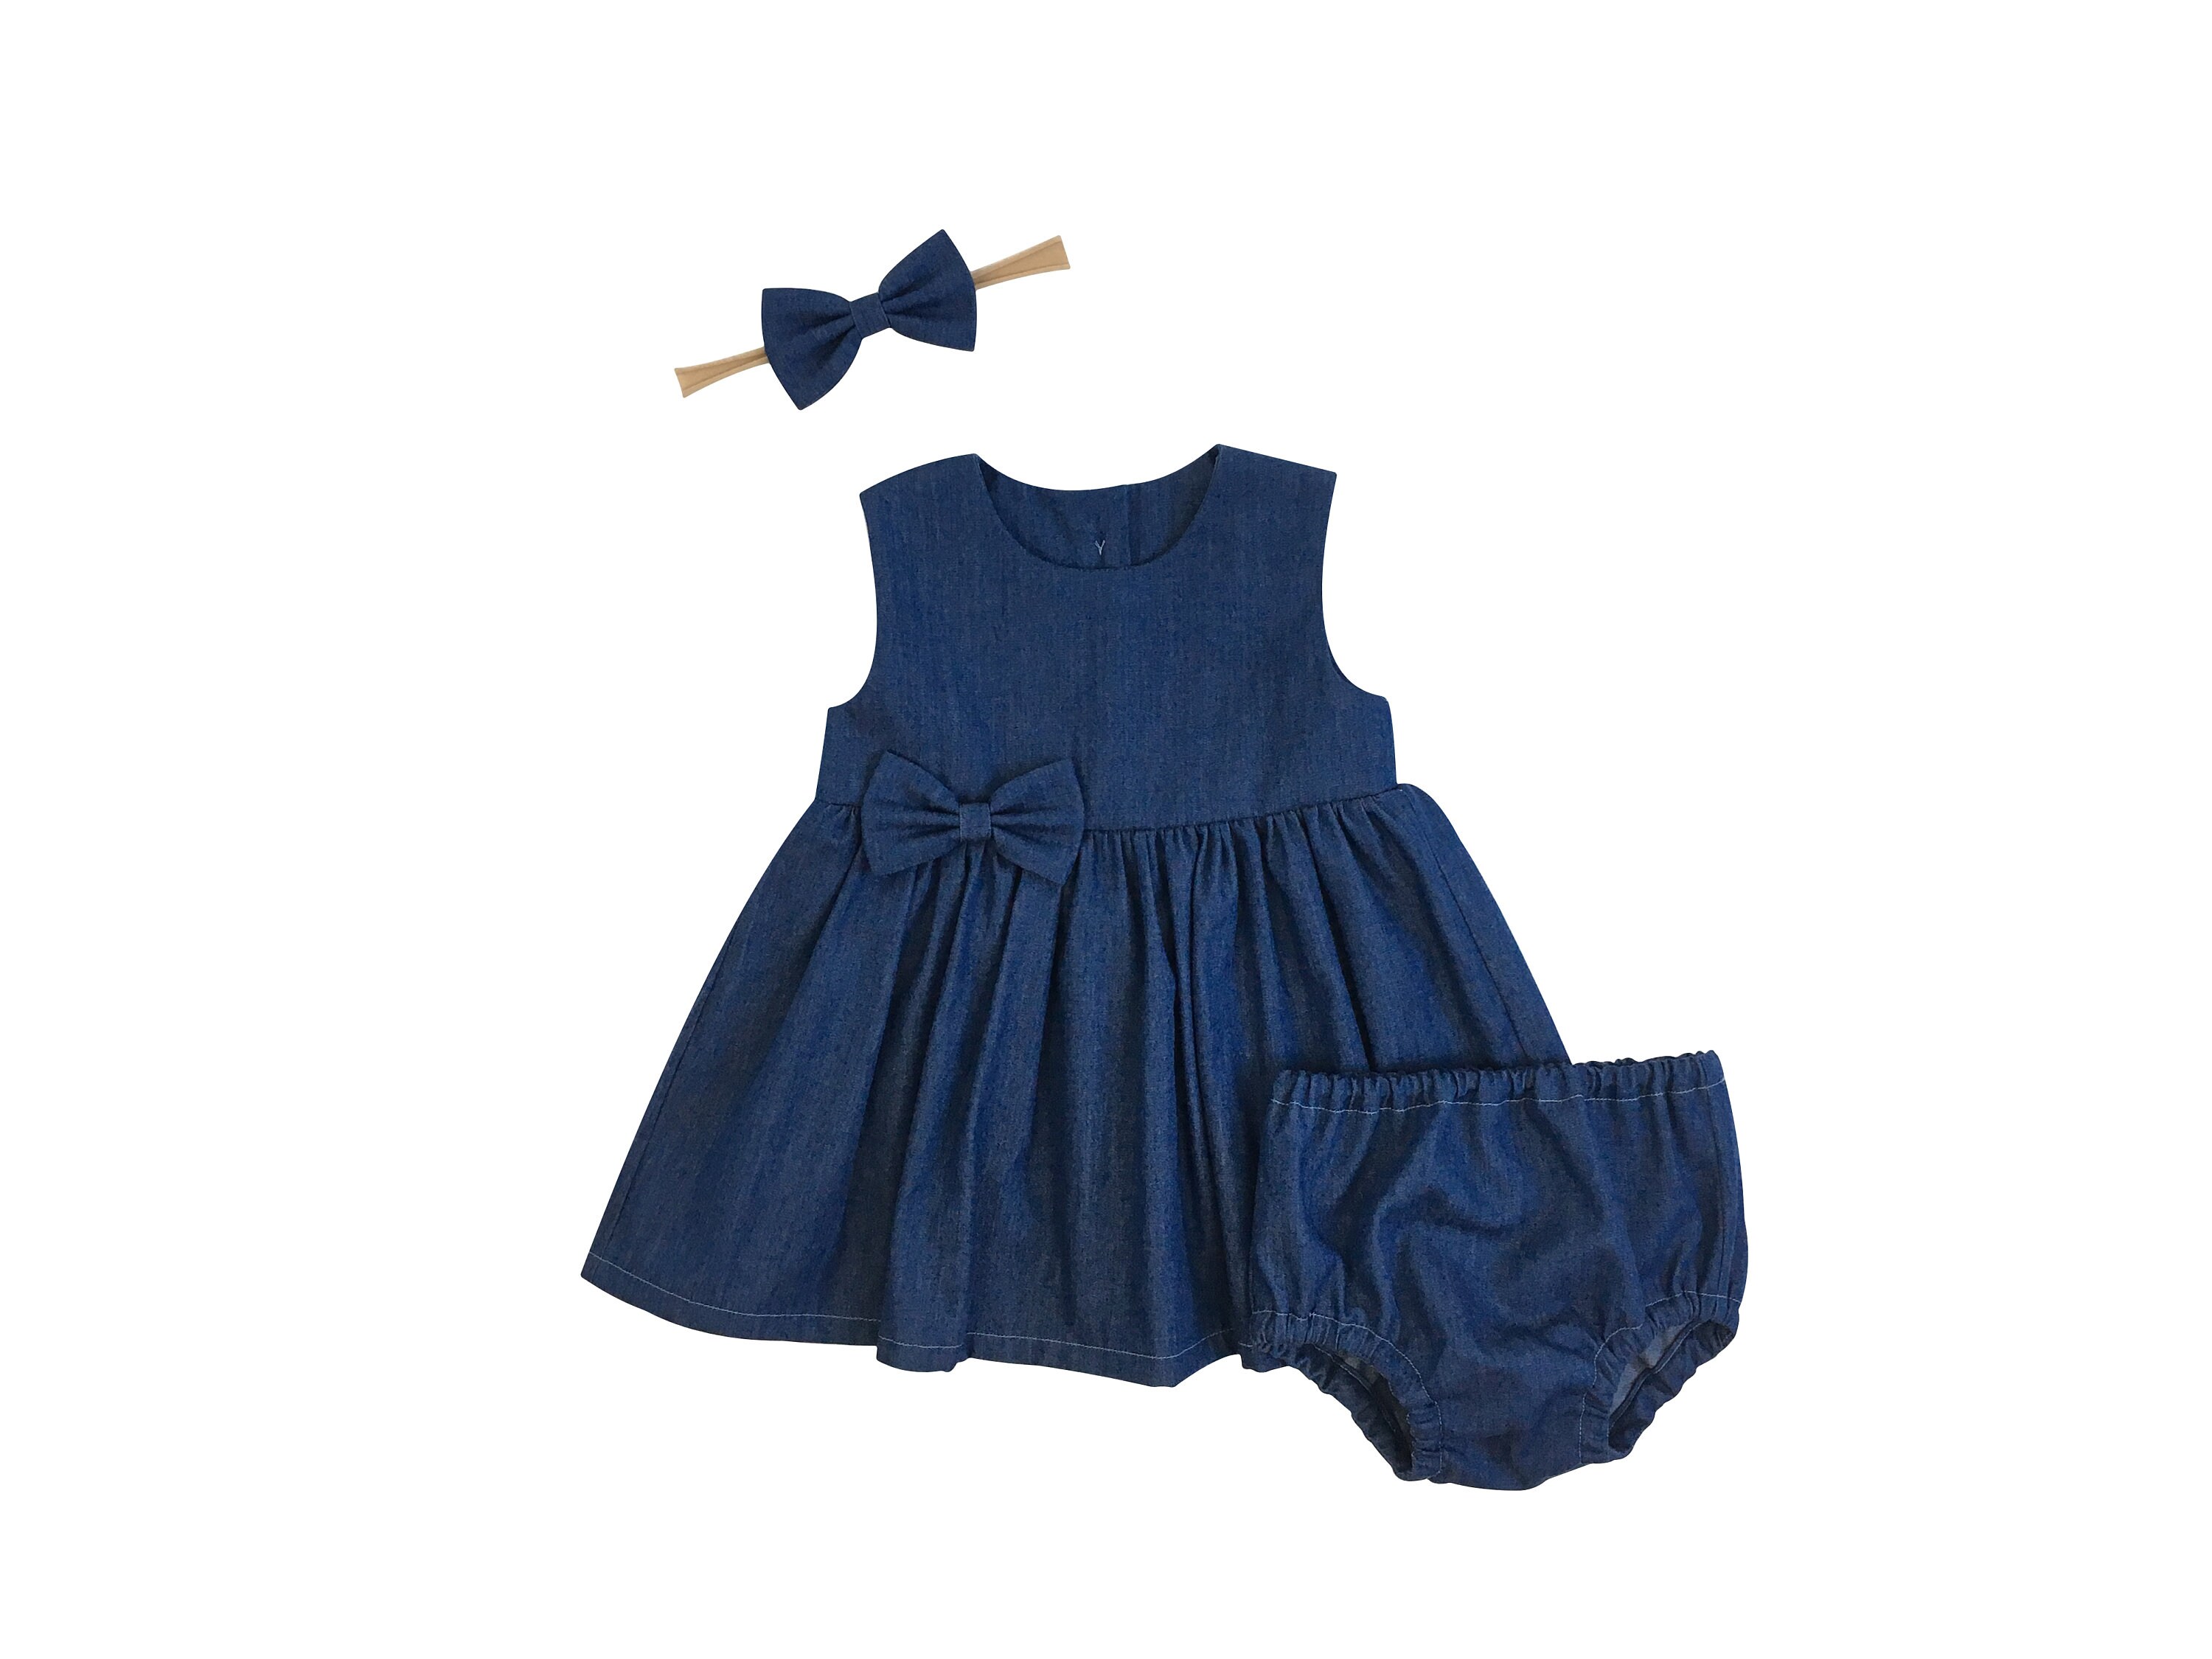 Denim Dress sleeveless blue jean dress girls denim dress | Etsy